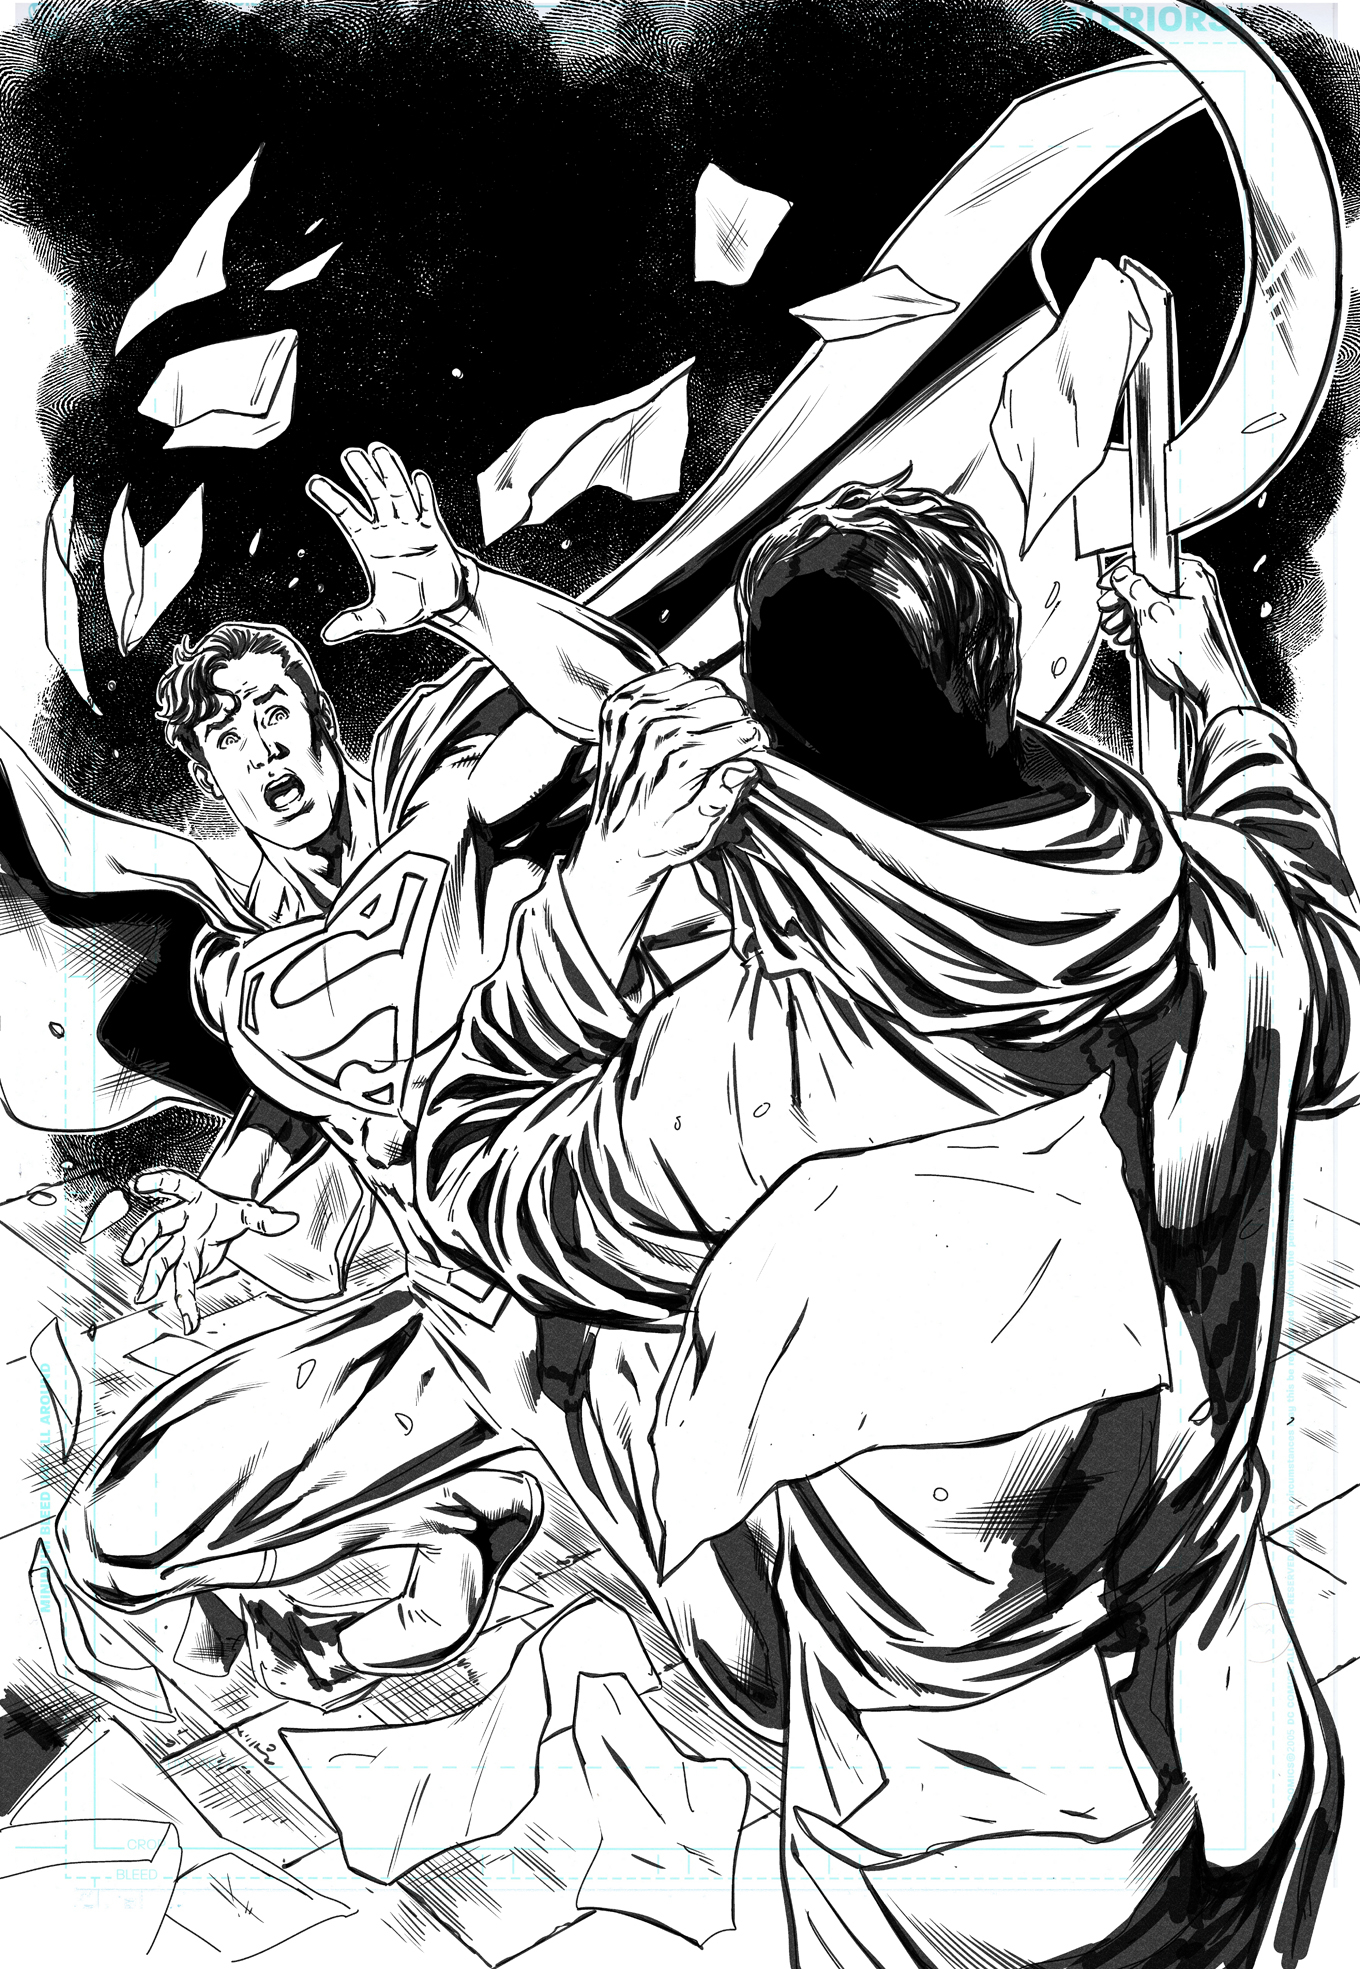 action comics cover 987a.jpg